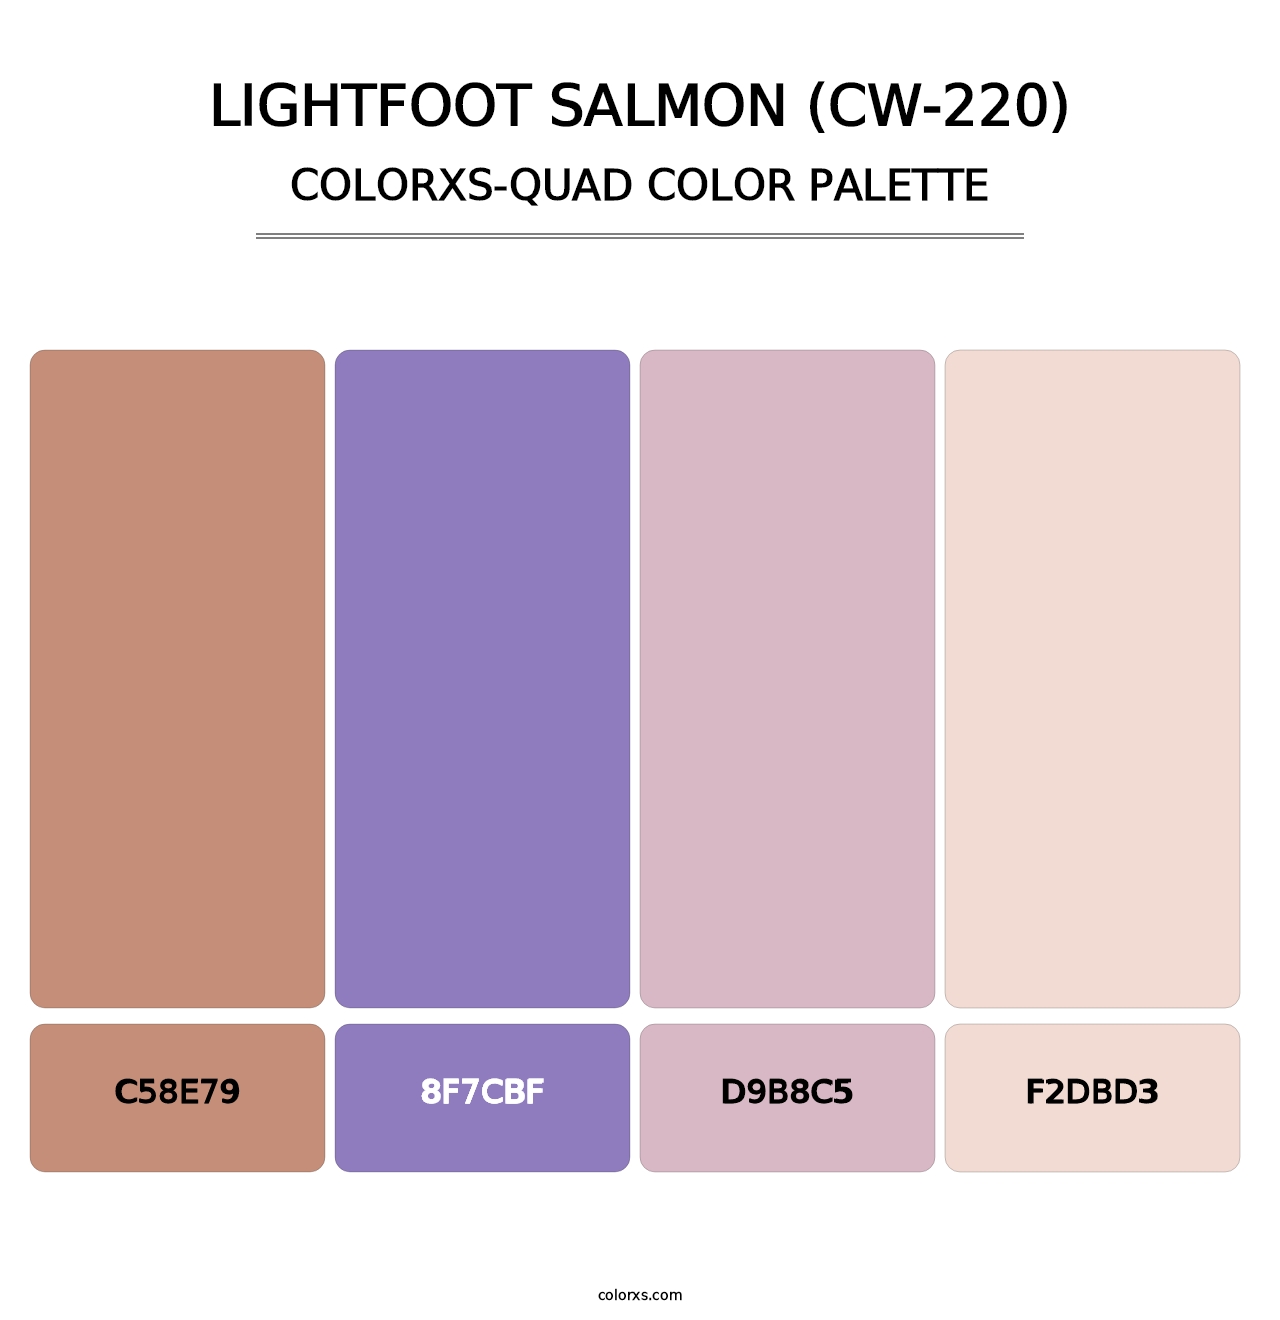 Lightfoot Salmon (CW-220) - Colorxs Quad Palette